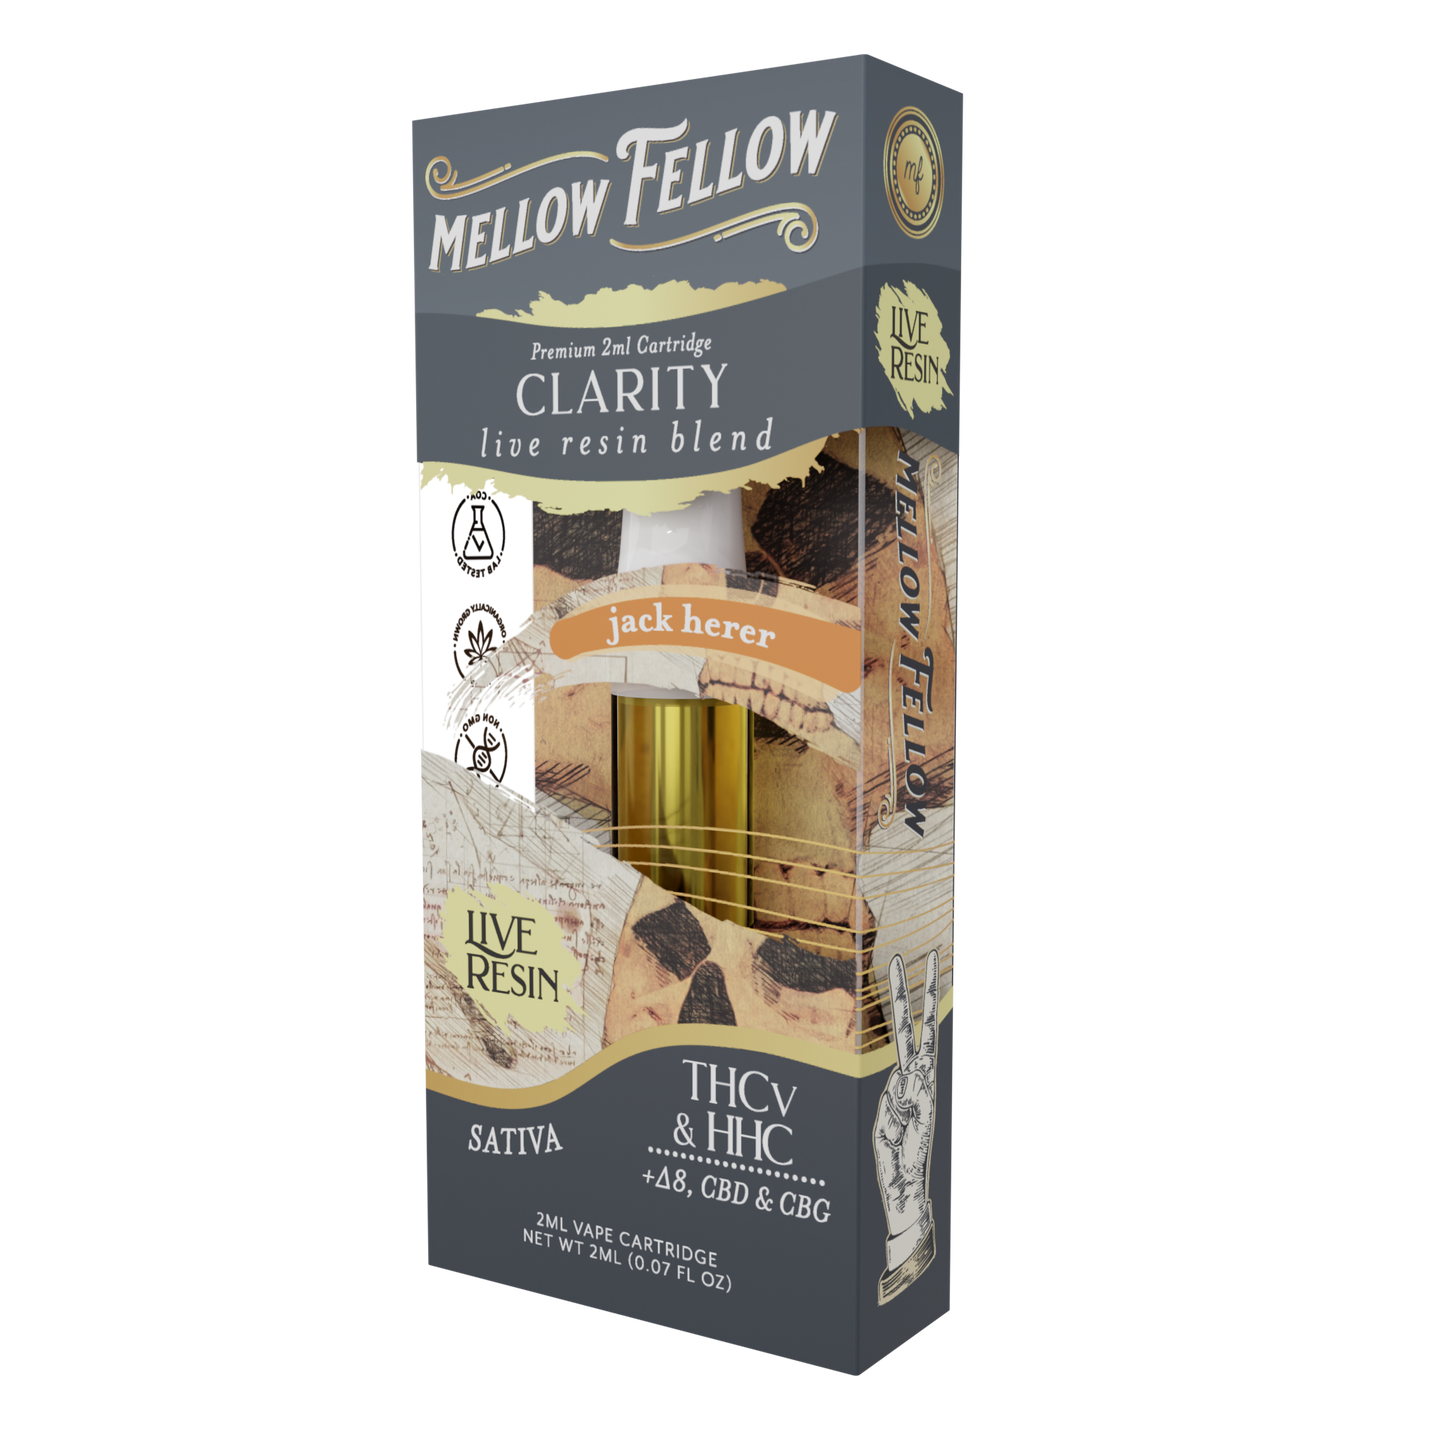 Mellow Fellow Clarity Blend 2ml Live Resin Vape Cartridge Jack Herer Best Sales Price - Vape Cartridges